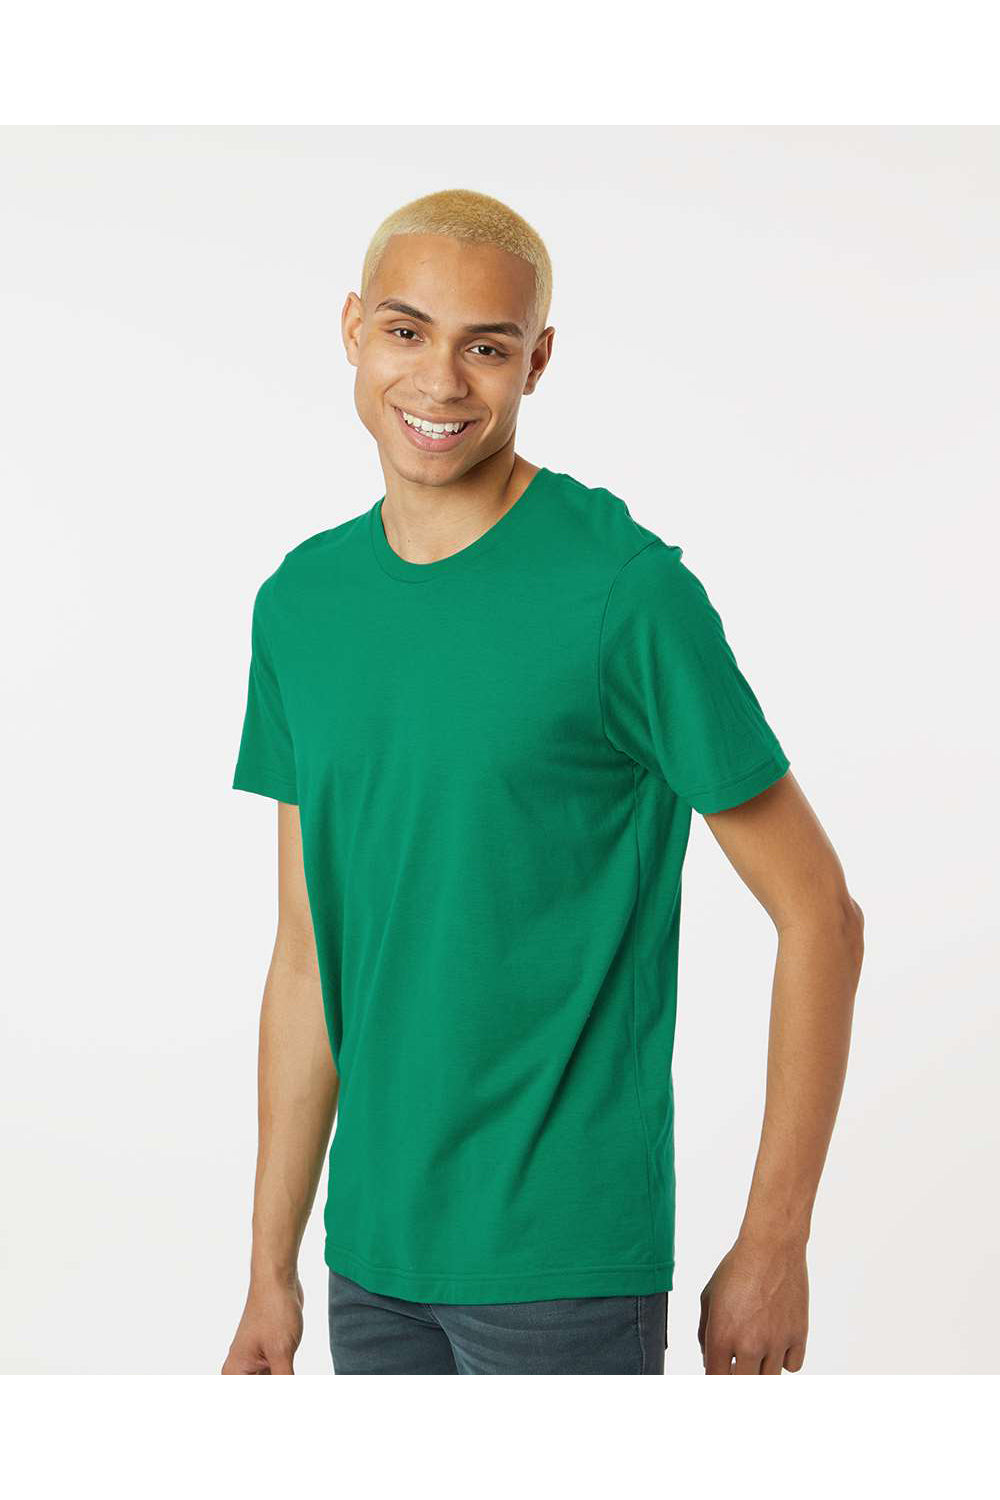 Tultex 602 Mens Short Sleeve Crewneck T-Shirt Kelly Green Model Side